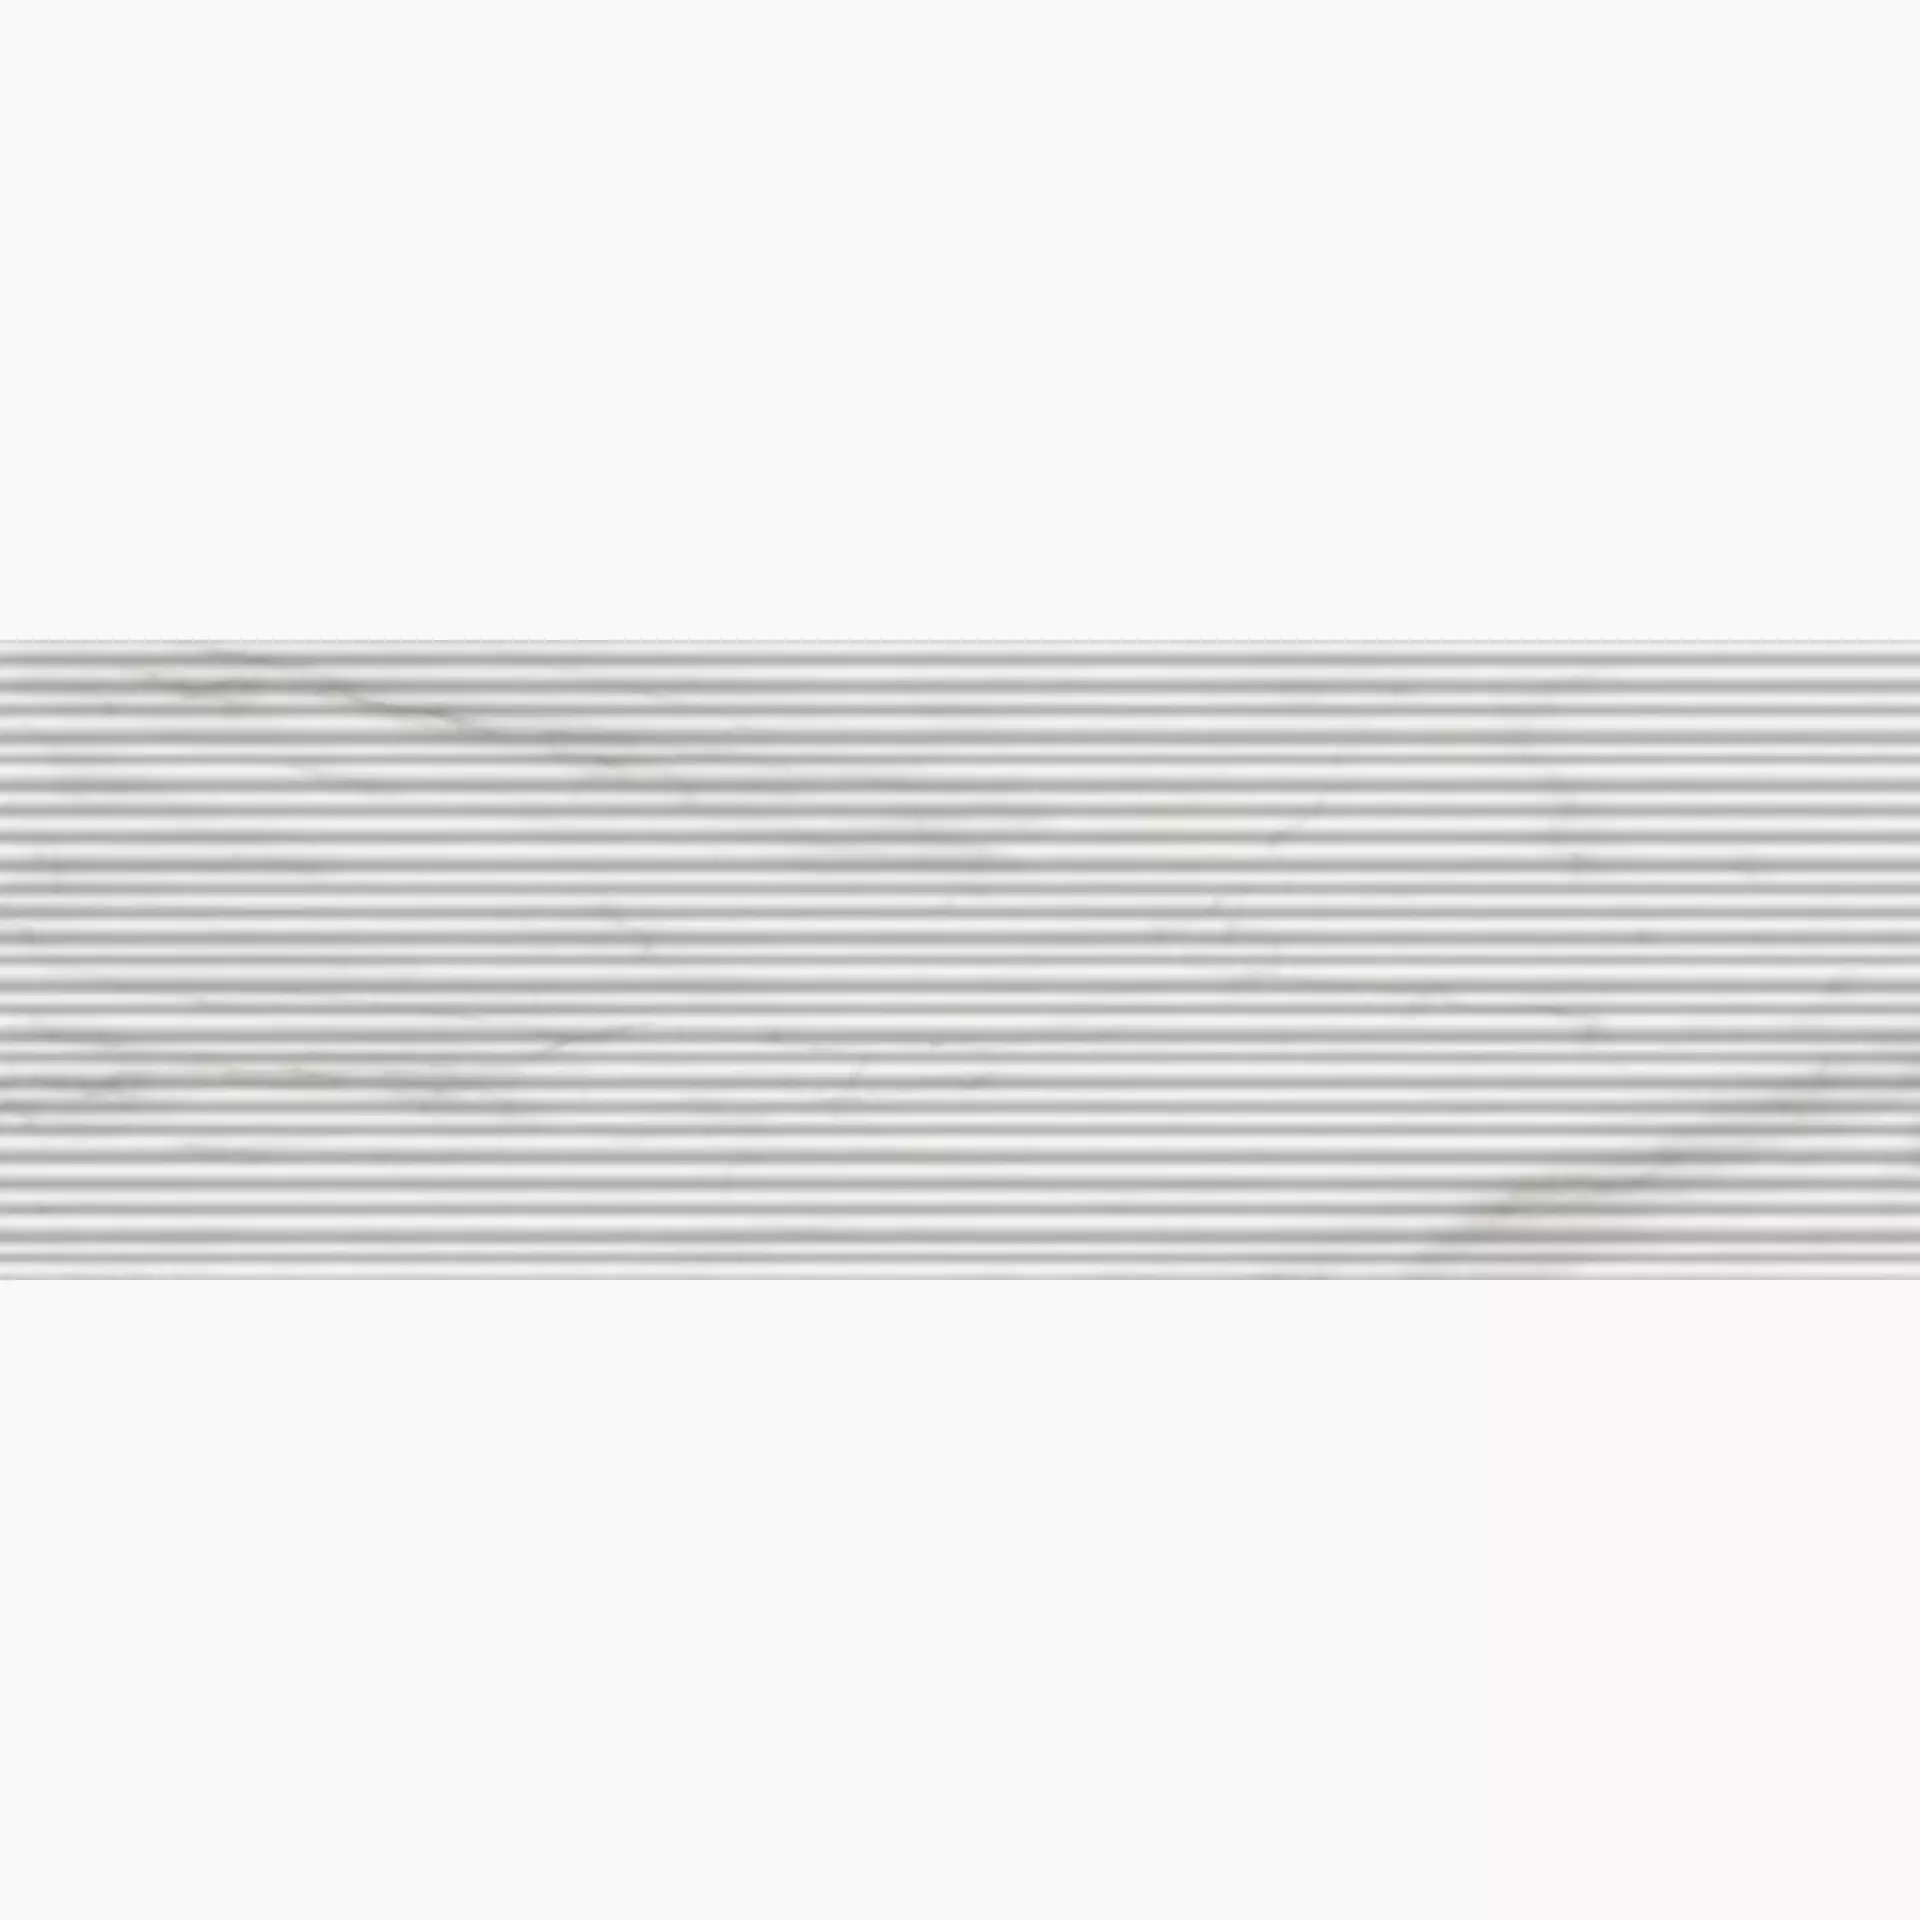 Ragno Imperiale Bianco Struttura Shangai 3D R74M struttura 30x90cm rectified 10mm